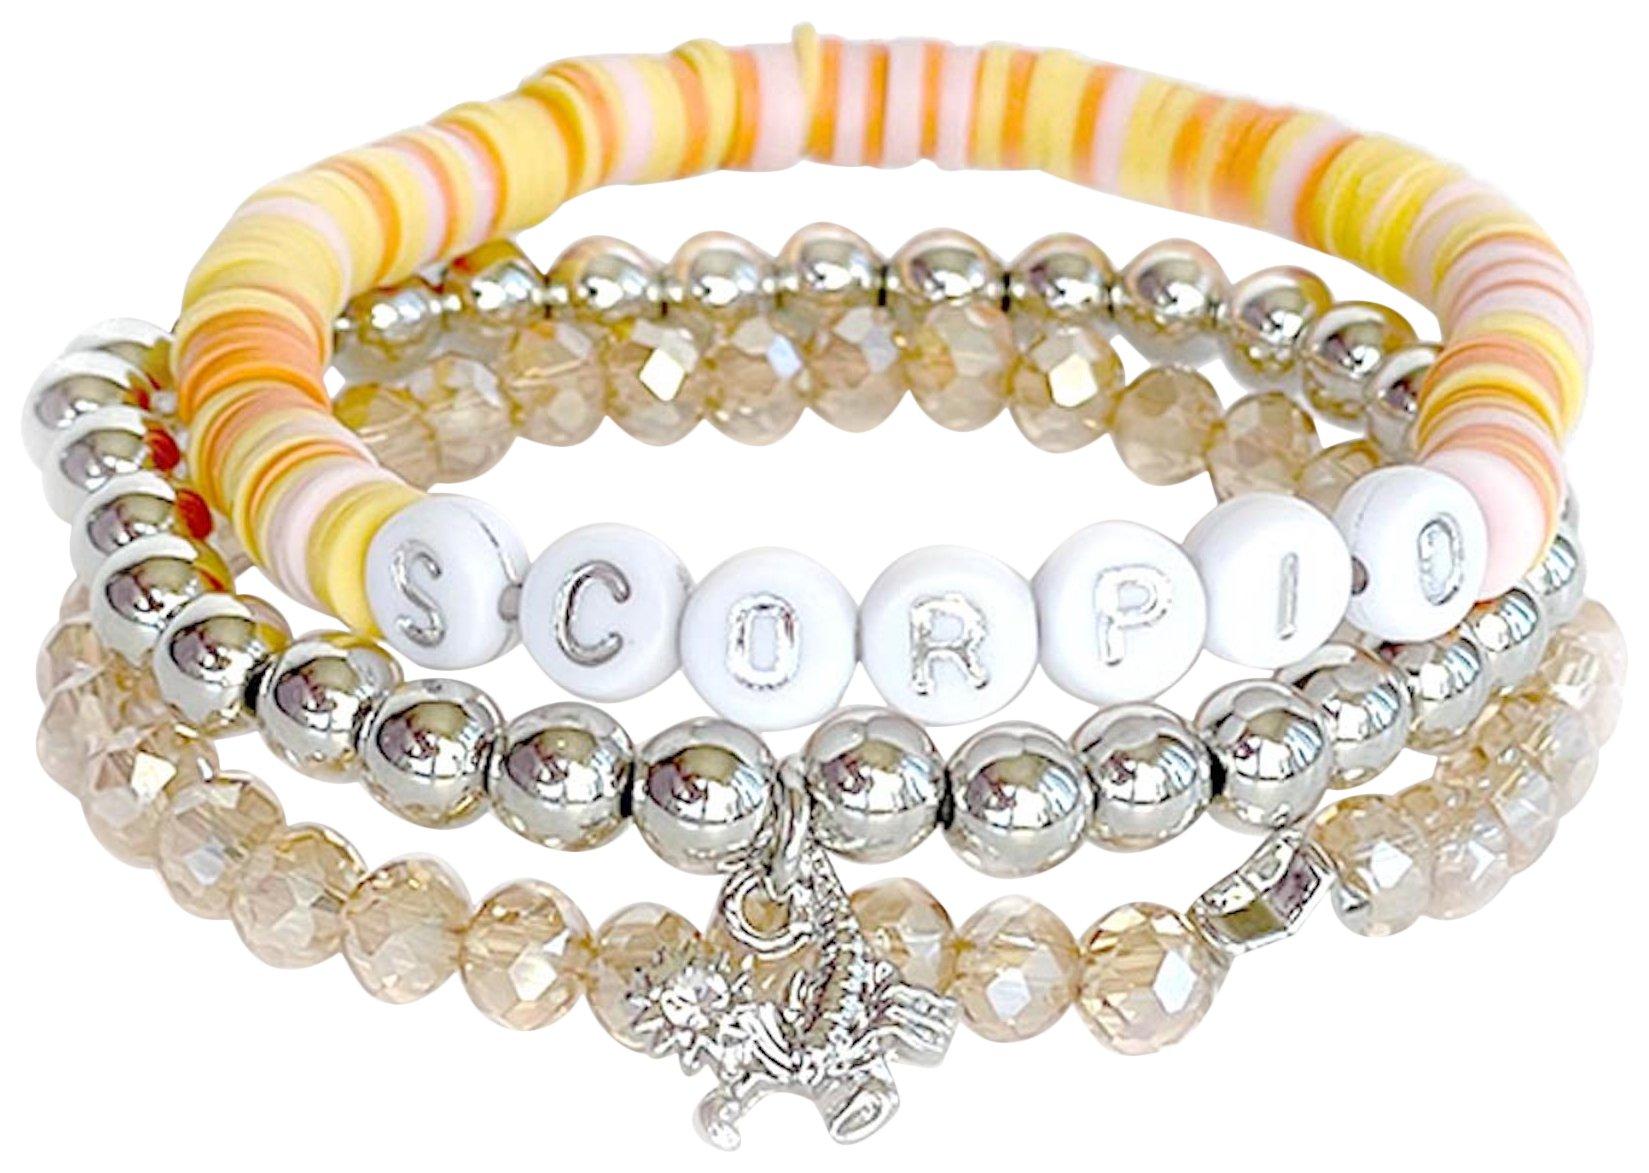 Jewelry Made By Me 3-Pc. 7 In. Scorpio Bead Bracelet Set